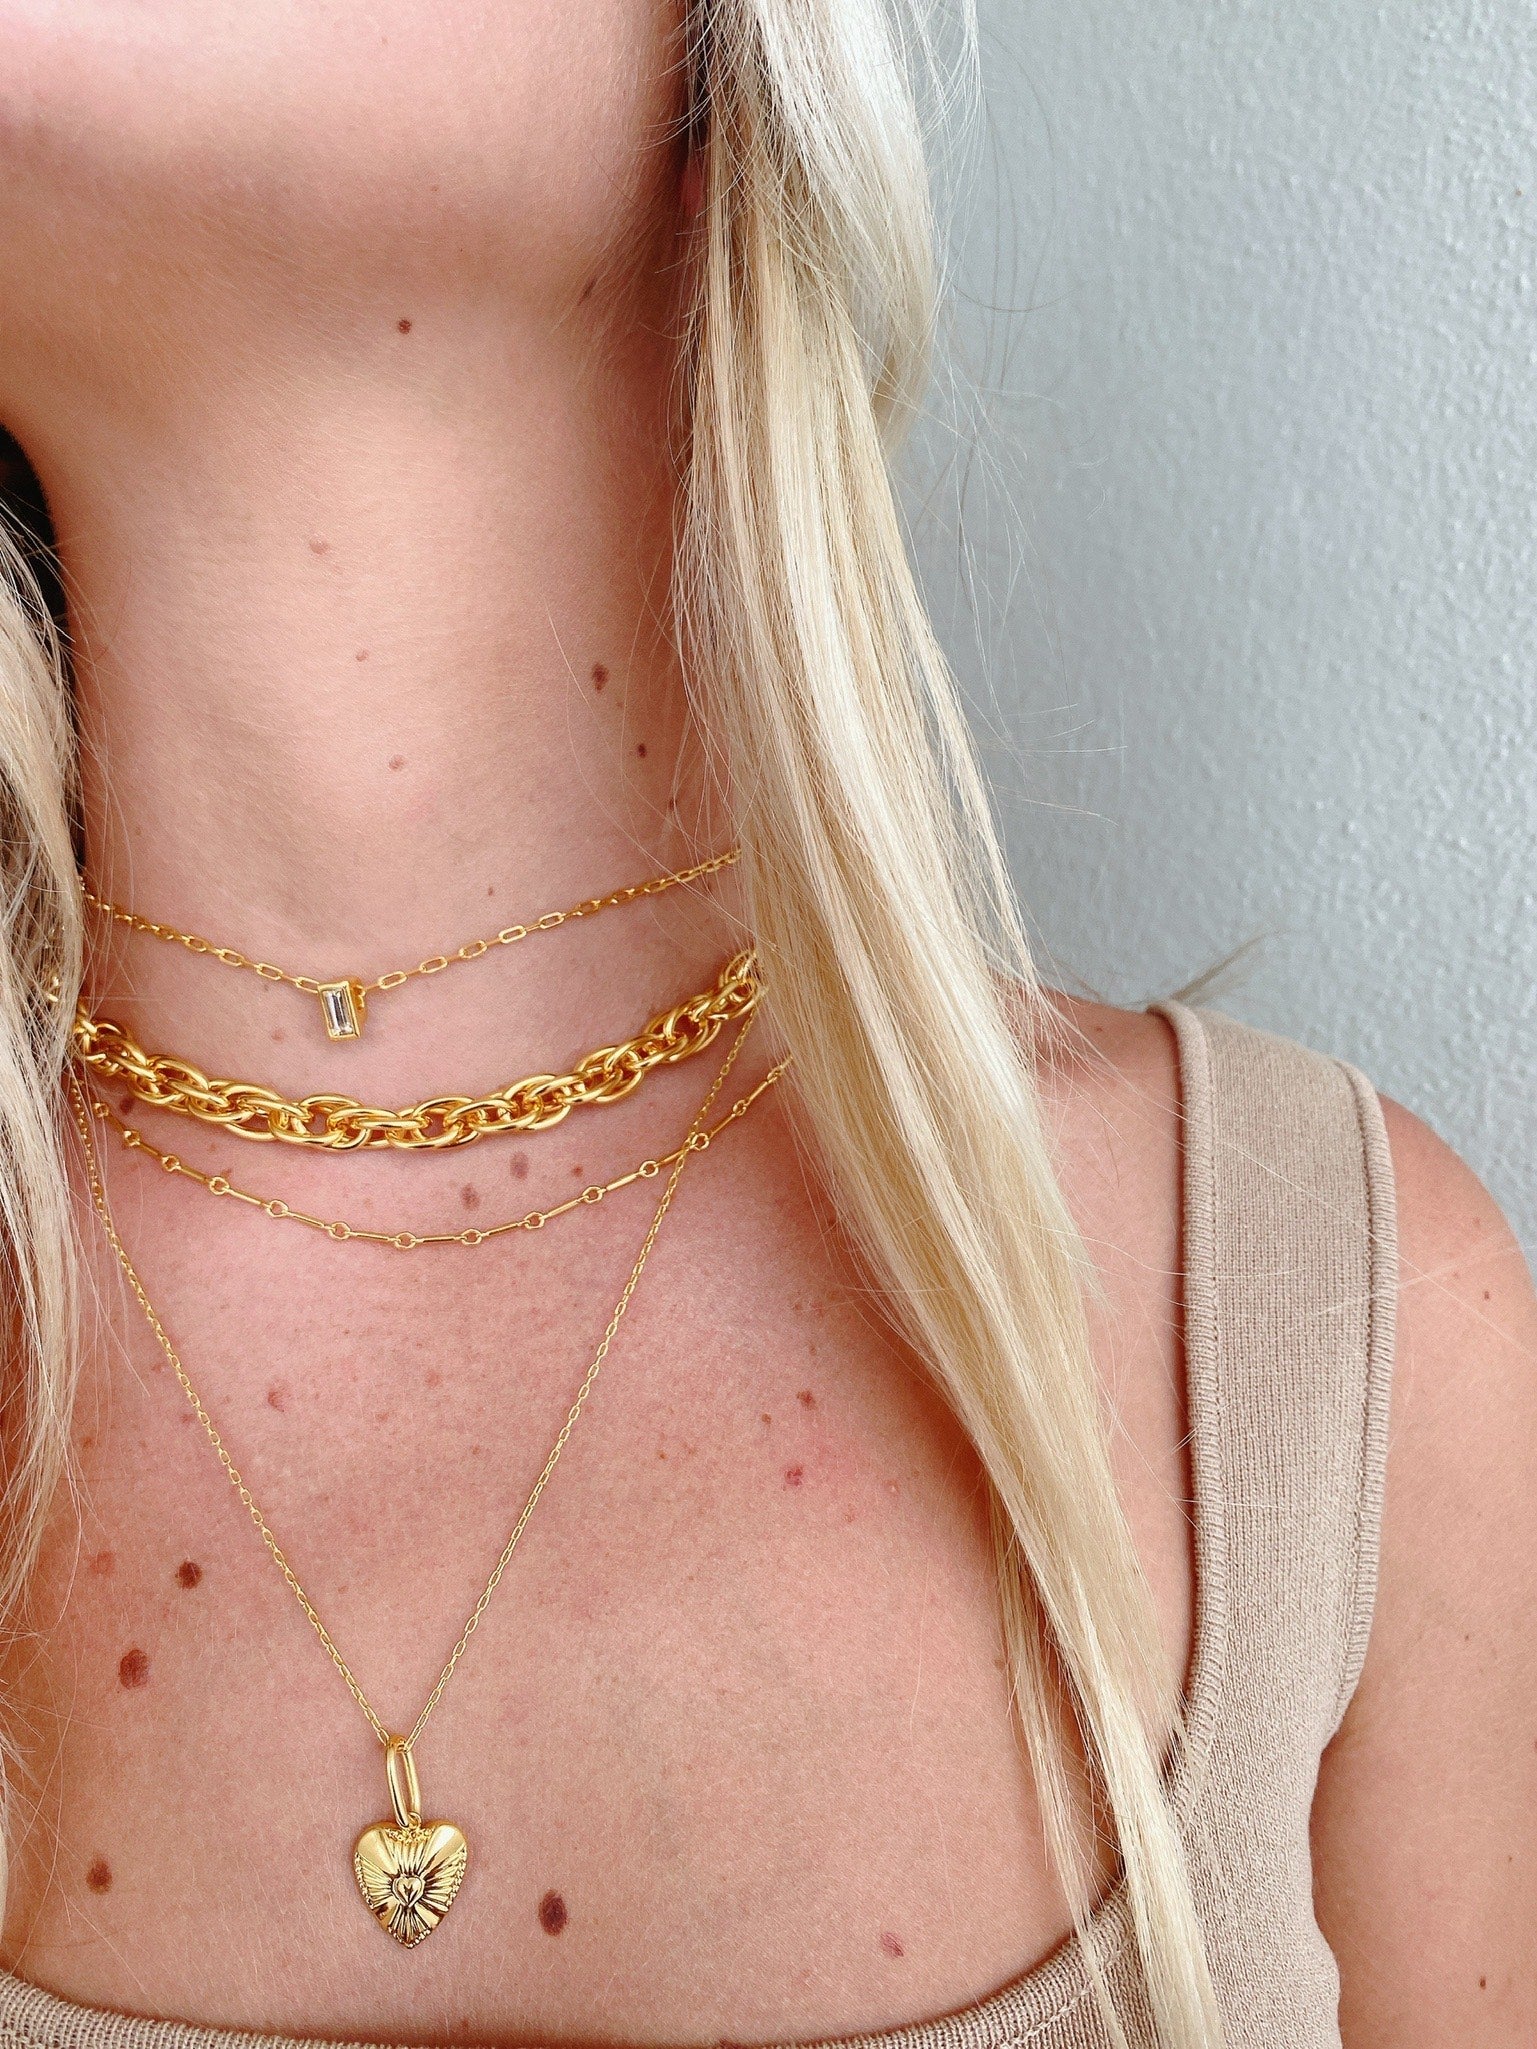 Amara Necklace in Gold - SAMPLE SALE!